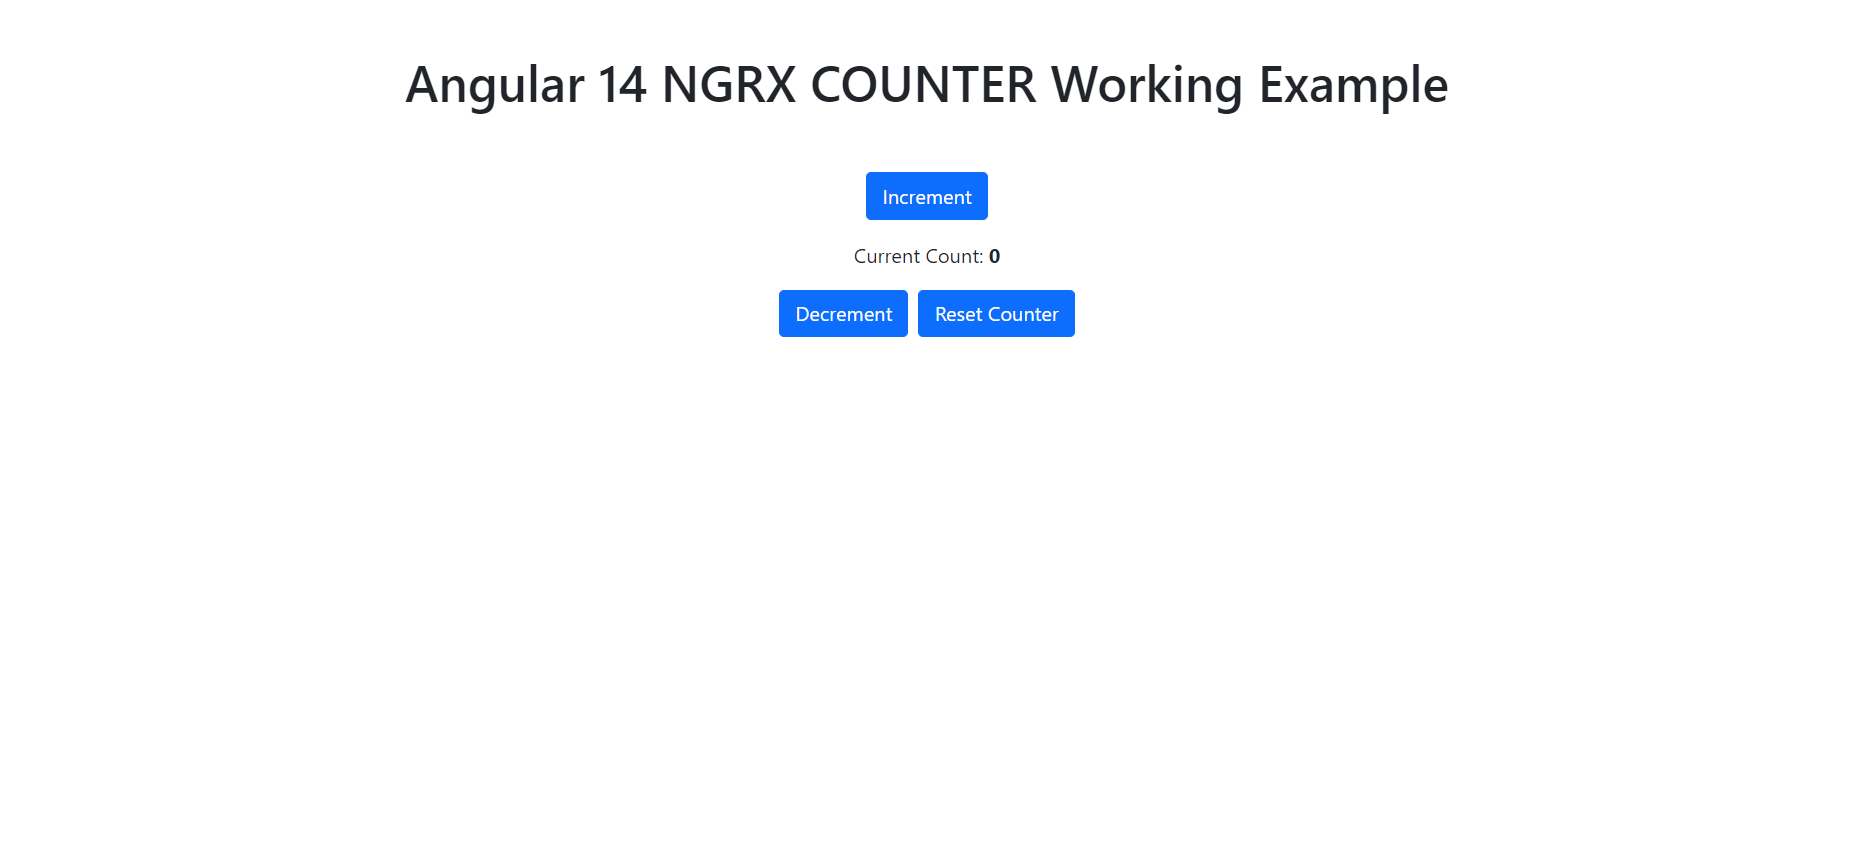 Angular 14 NGRX COUNTER Working Example